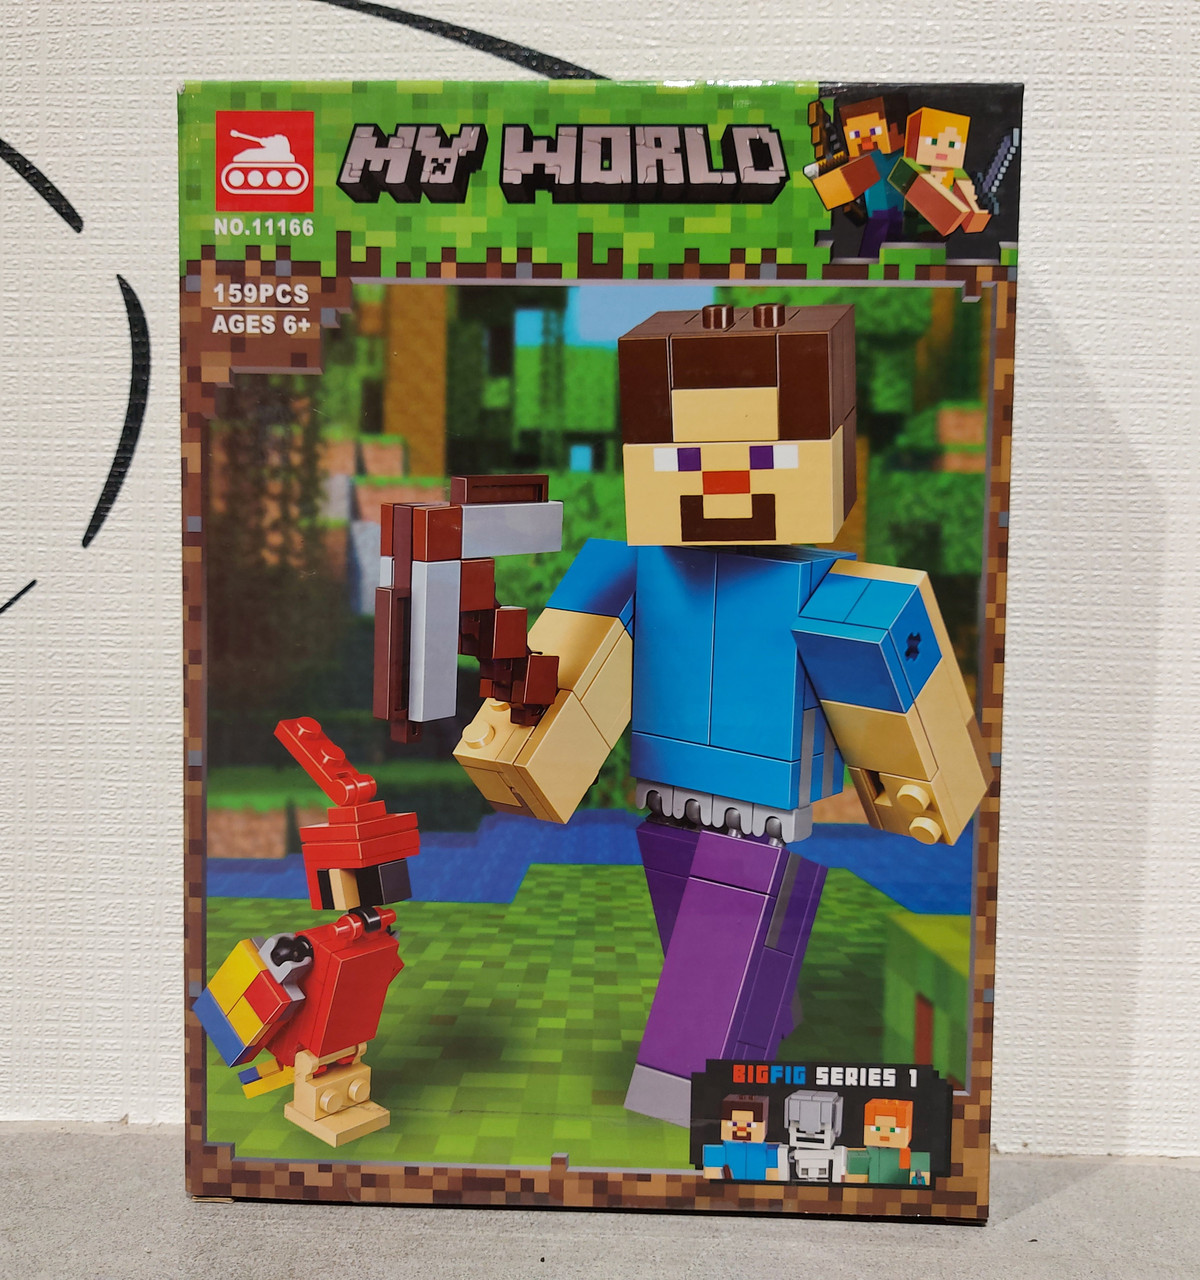 Конструктор My world 11166 159 pcs. "Стив с попугаем". Minecraft. Майнкрафт.